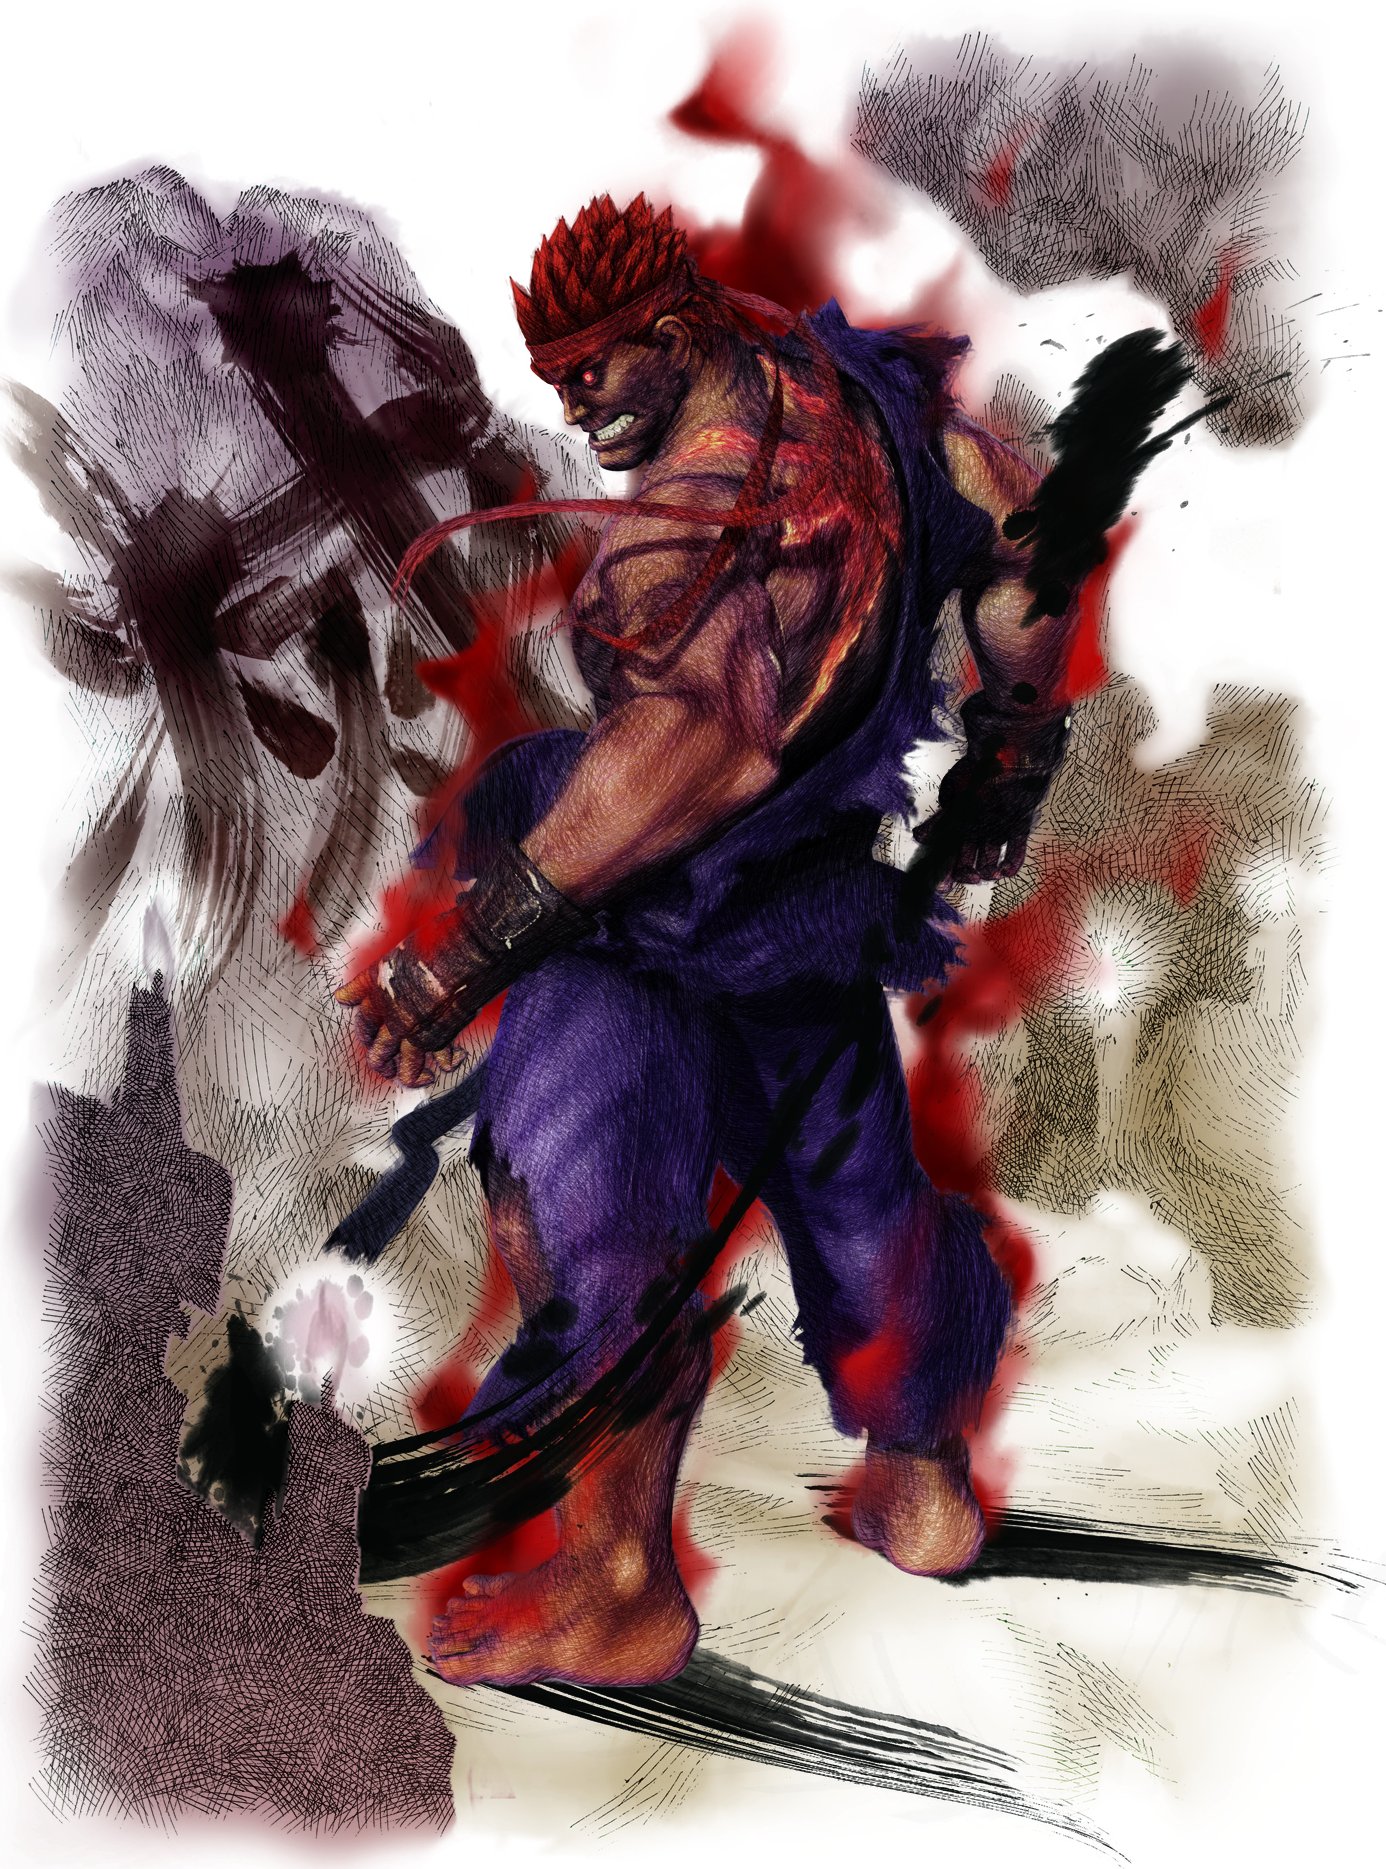 Evil Ryu (Street Fighter IV), MasterHoshiStats Wiki